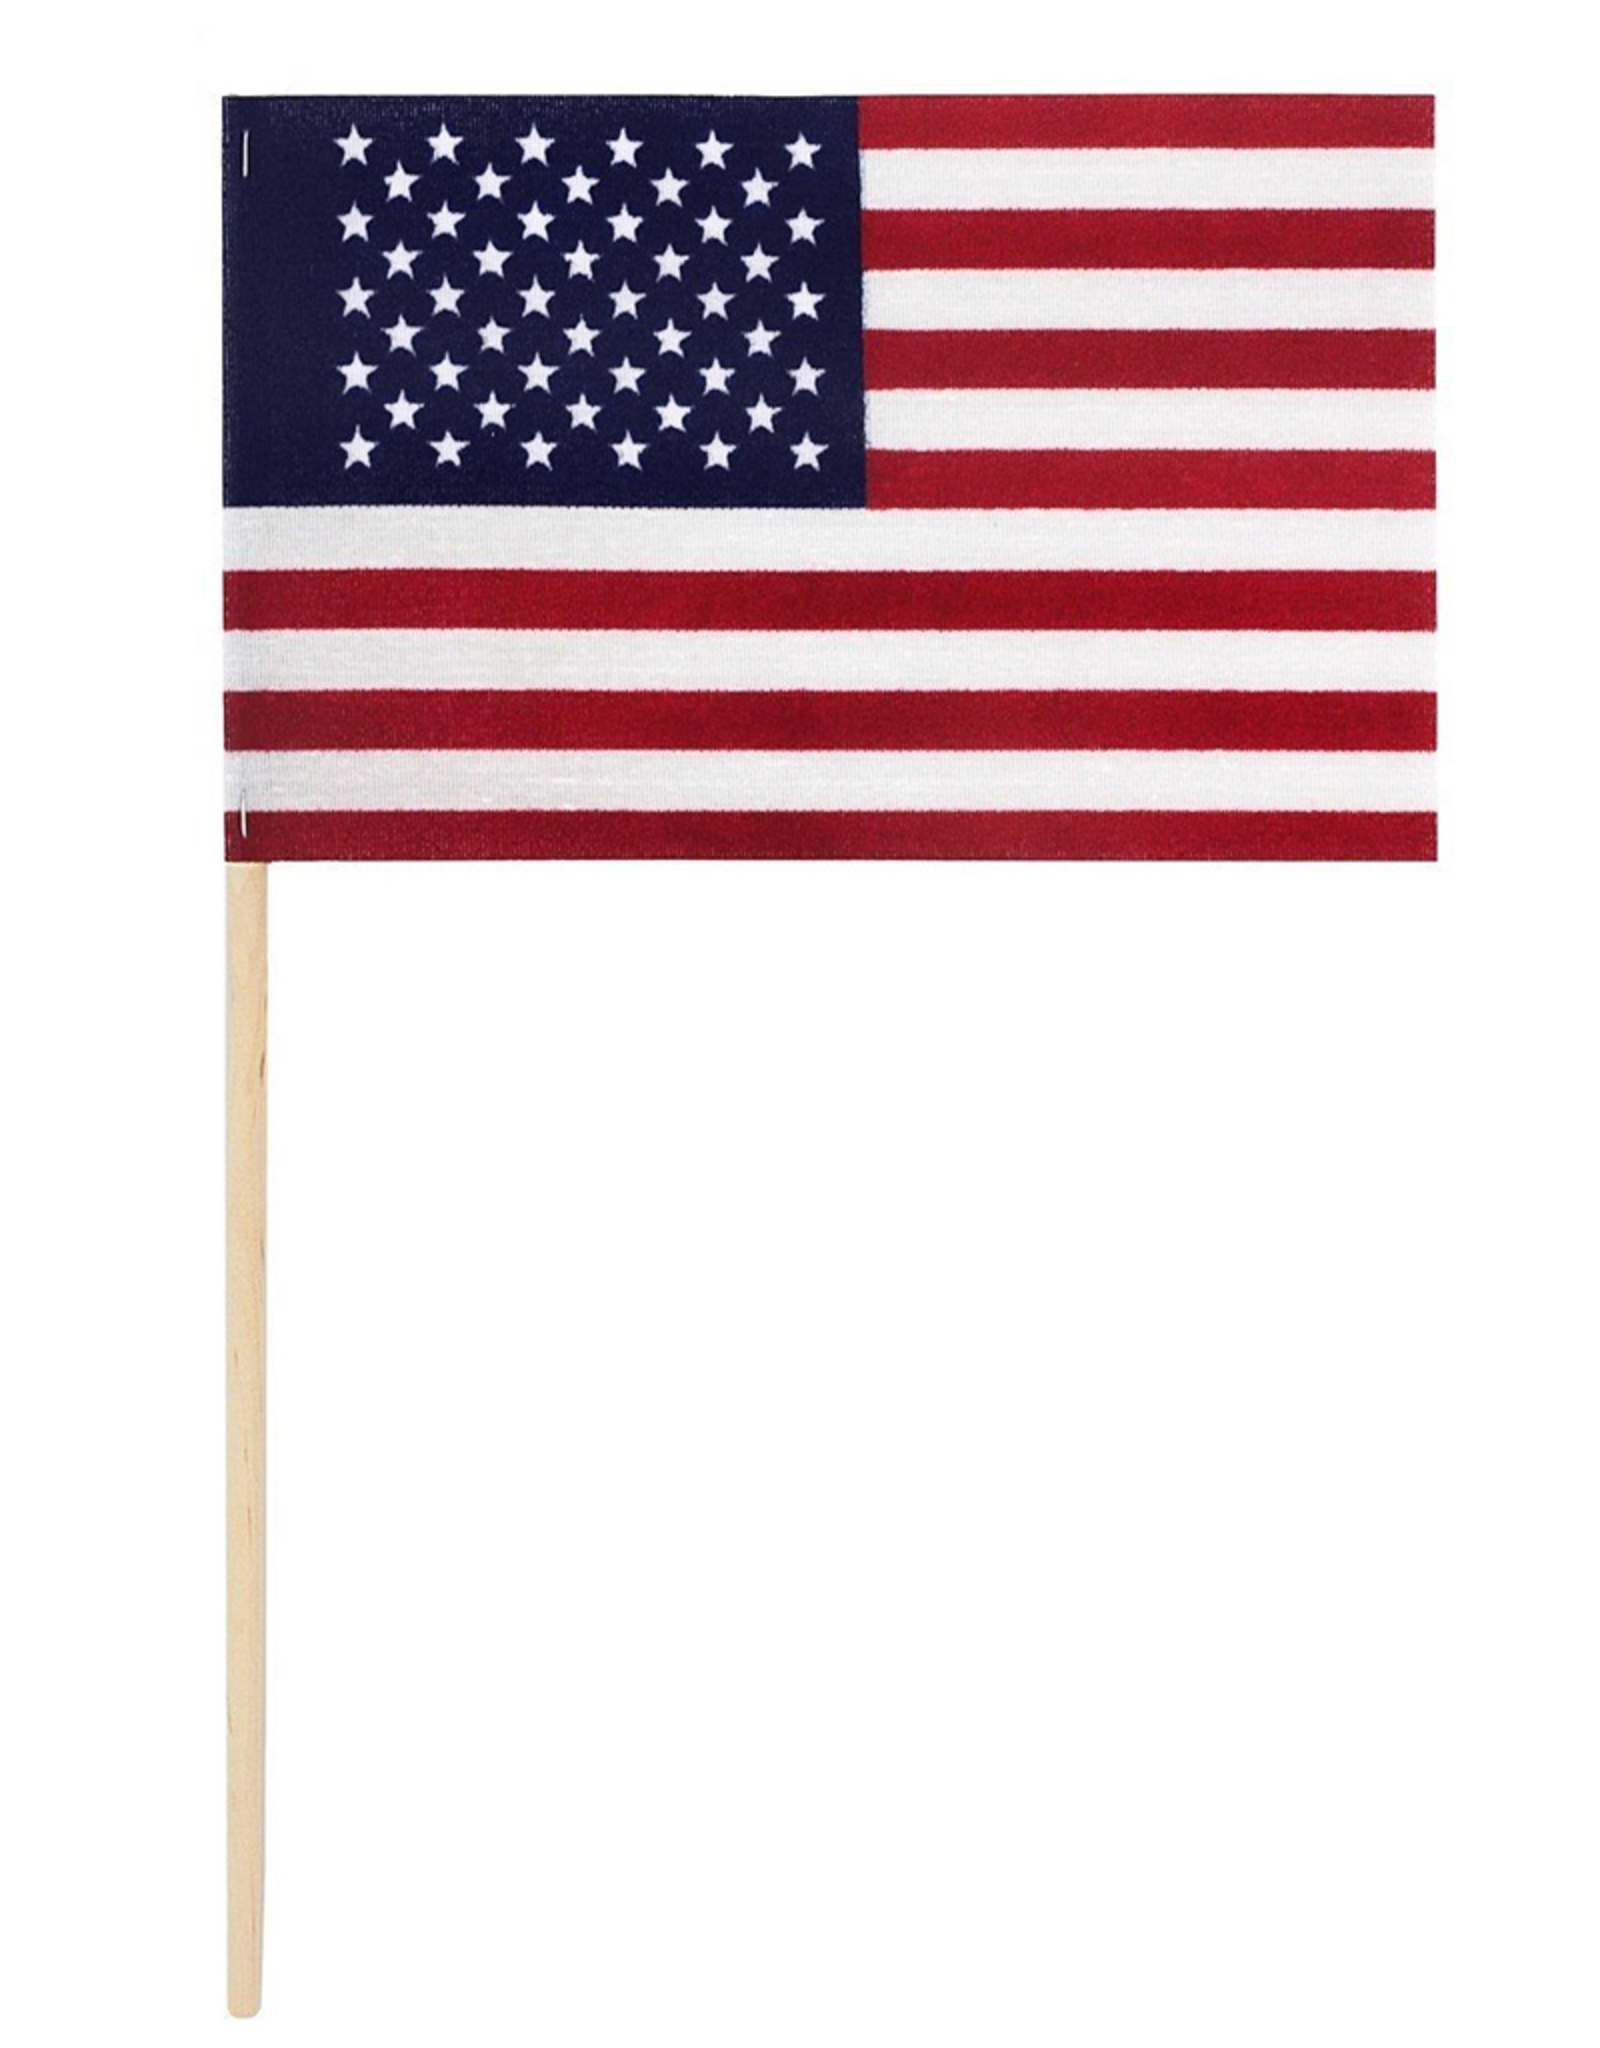 Valley Forge Hand Held U.S. American Flag 4x6 on 1ft Wood Dowel